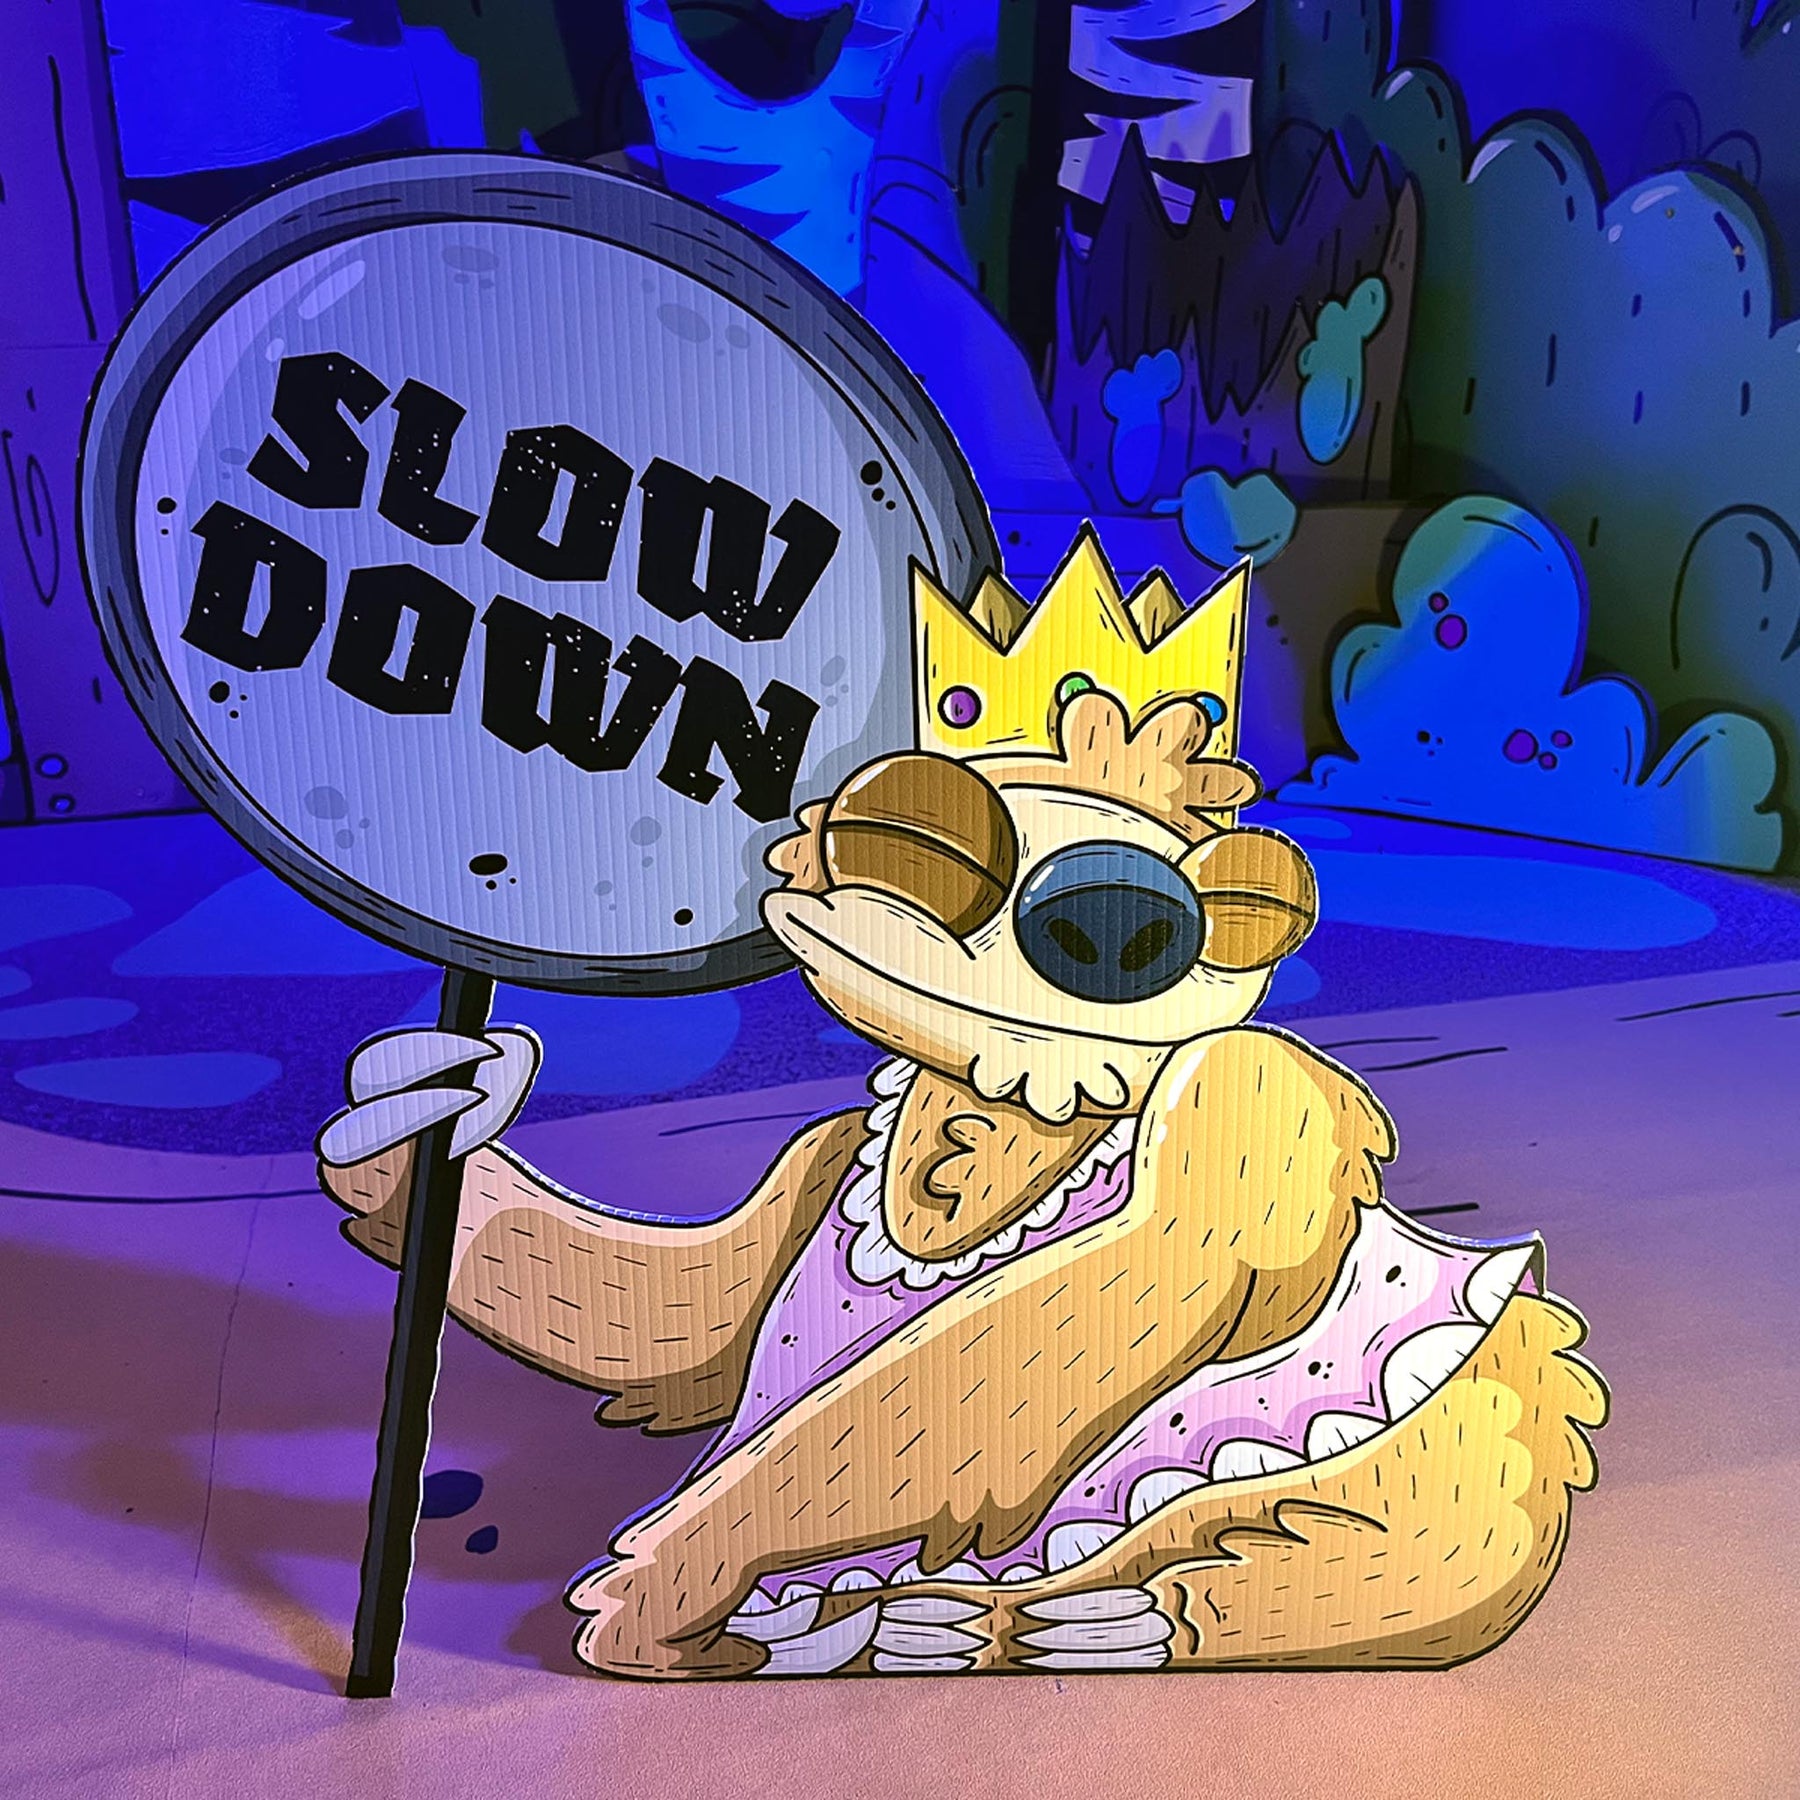 Sofia the Sloth | "Slow Down" Yard Sign (Wonderwood Edition)